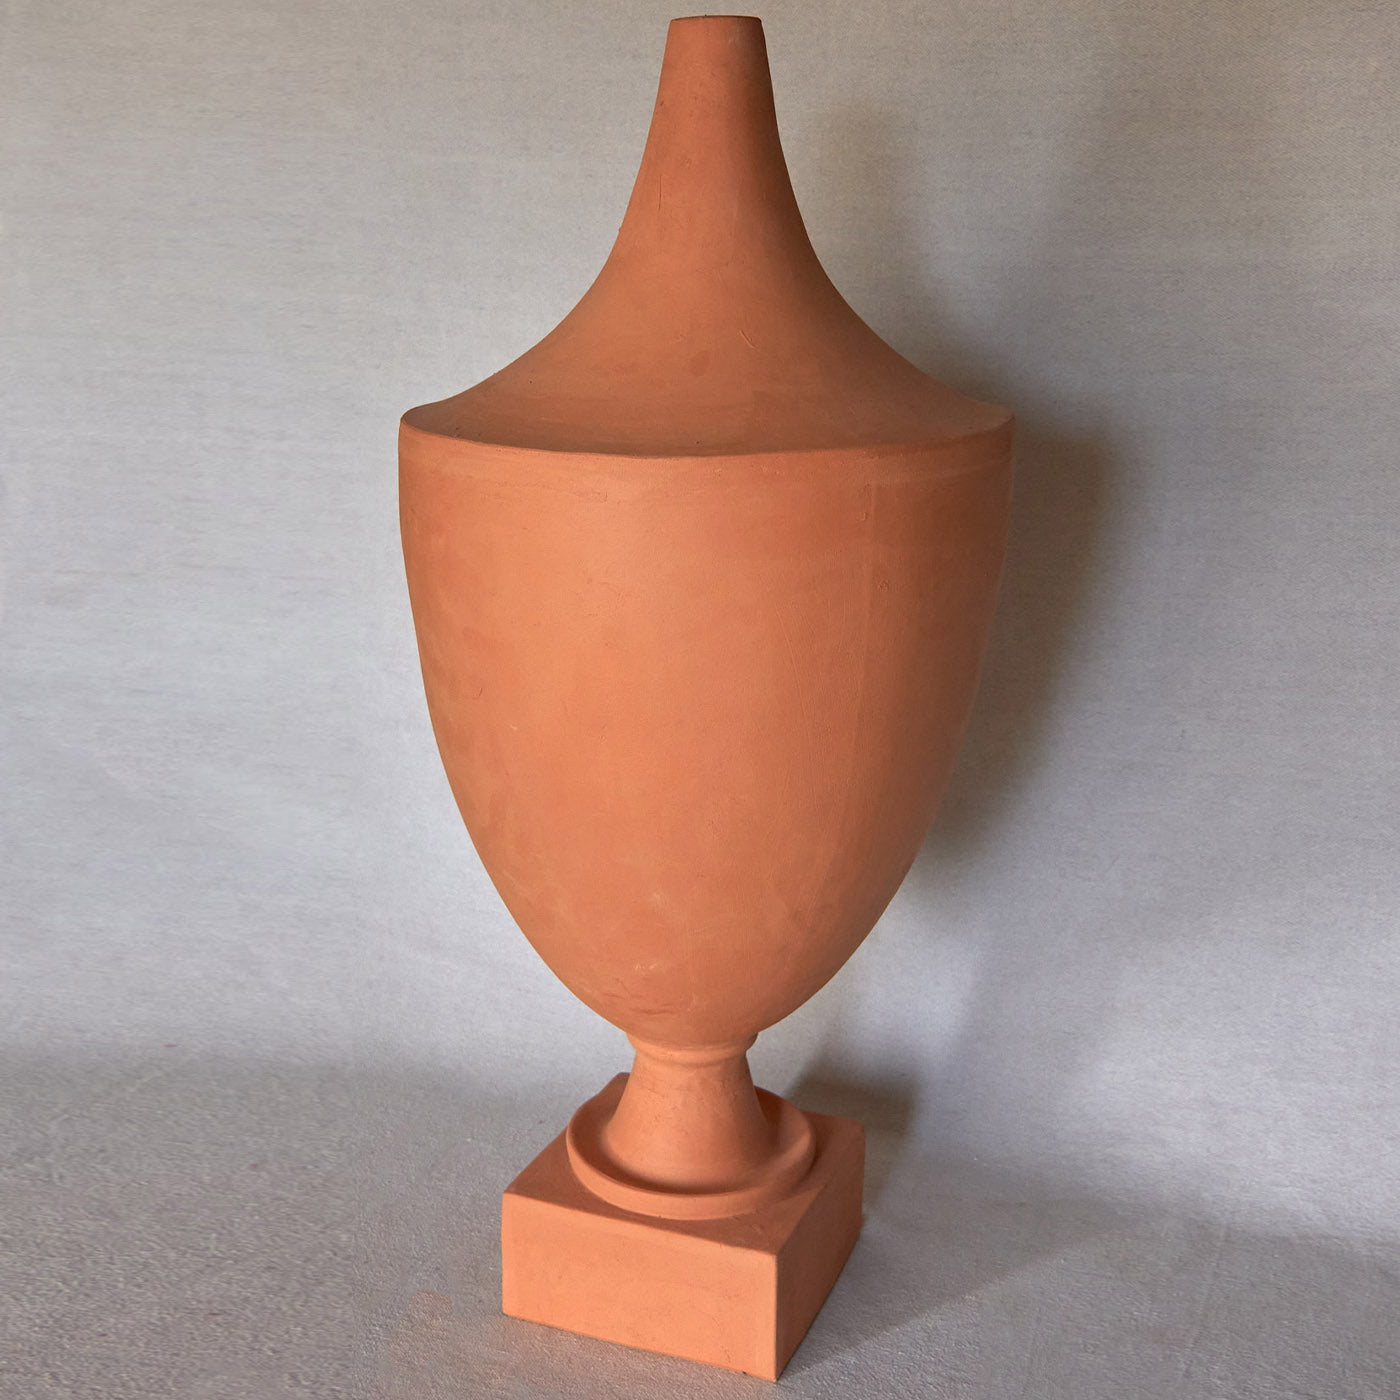 Ponti Small Brown Vase - Alternative view 1